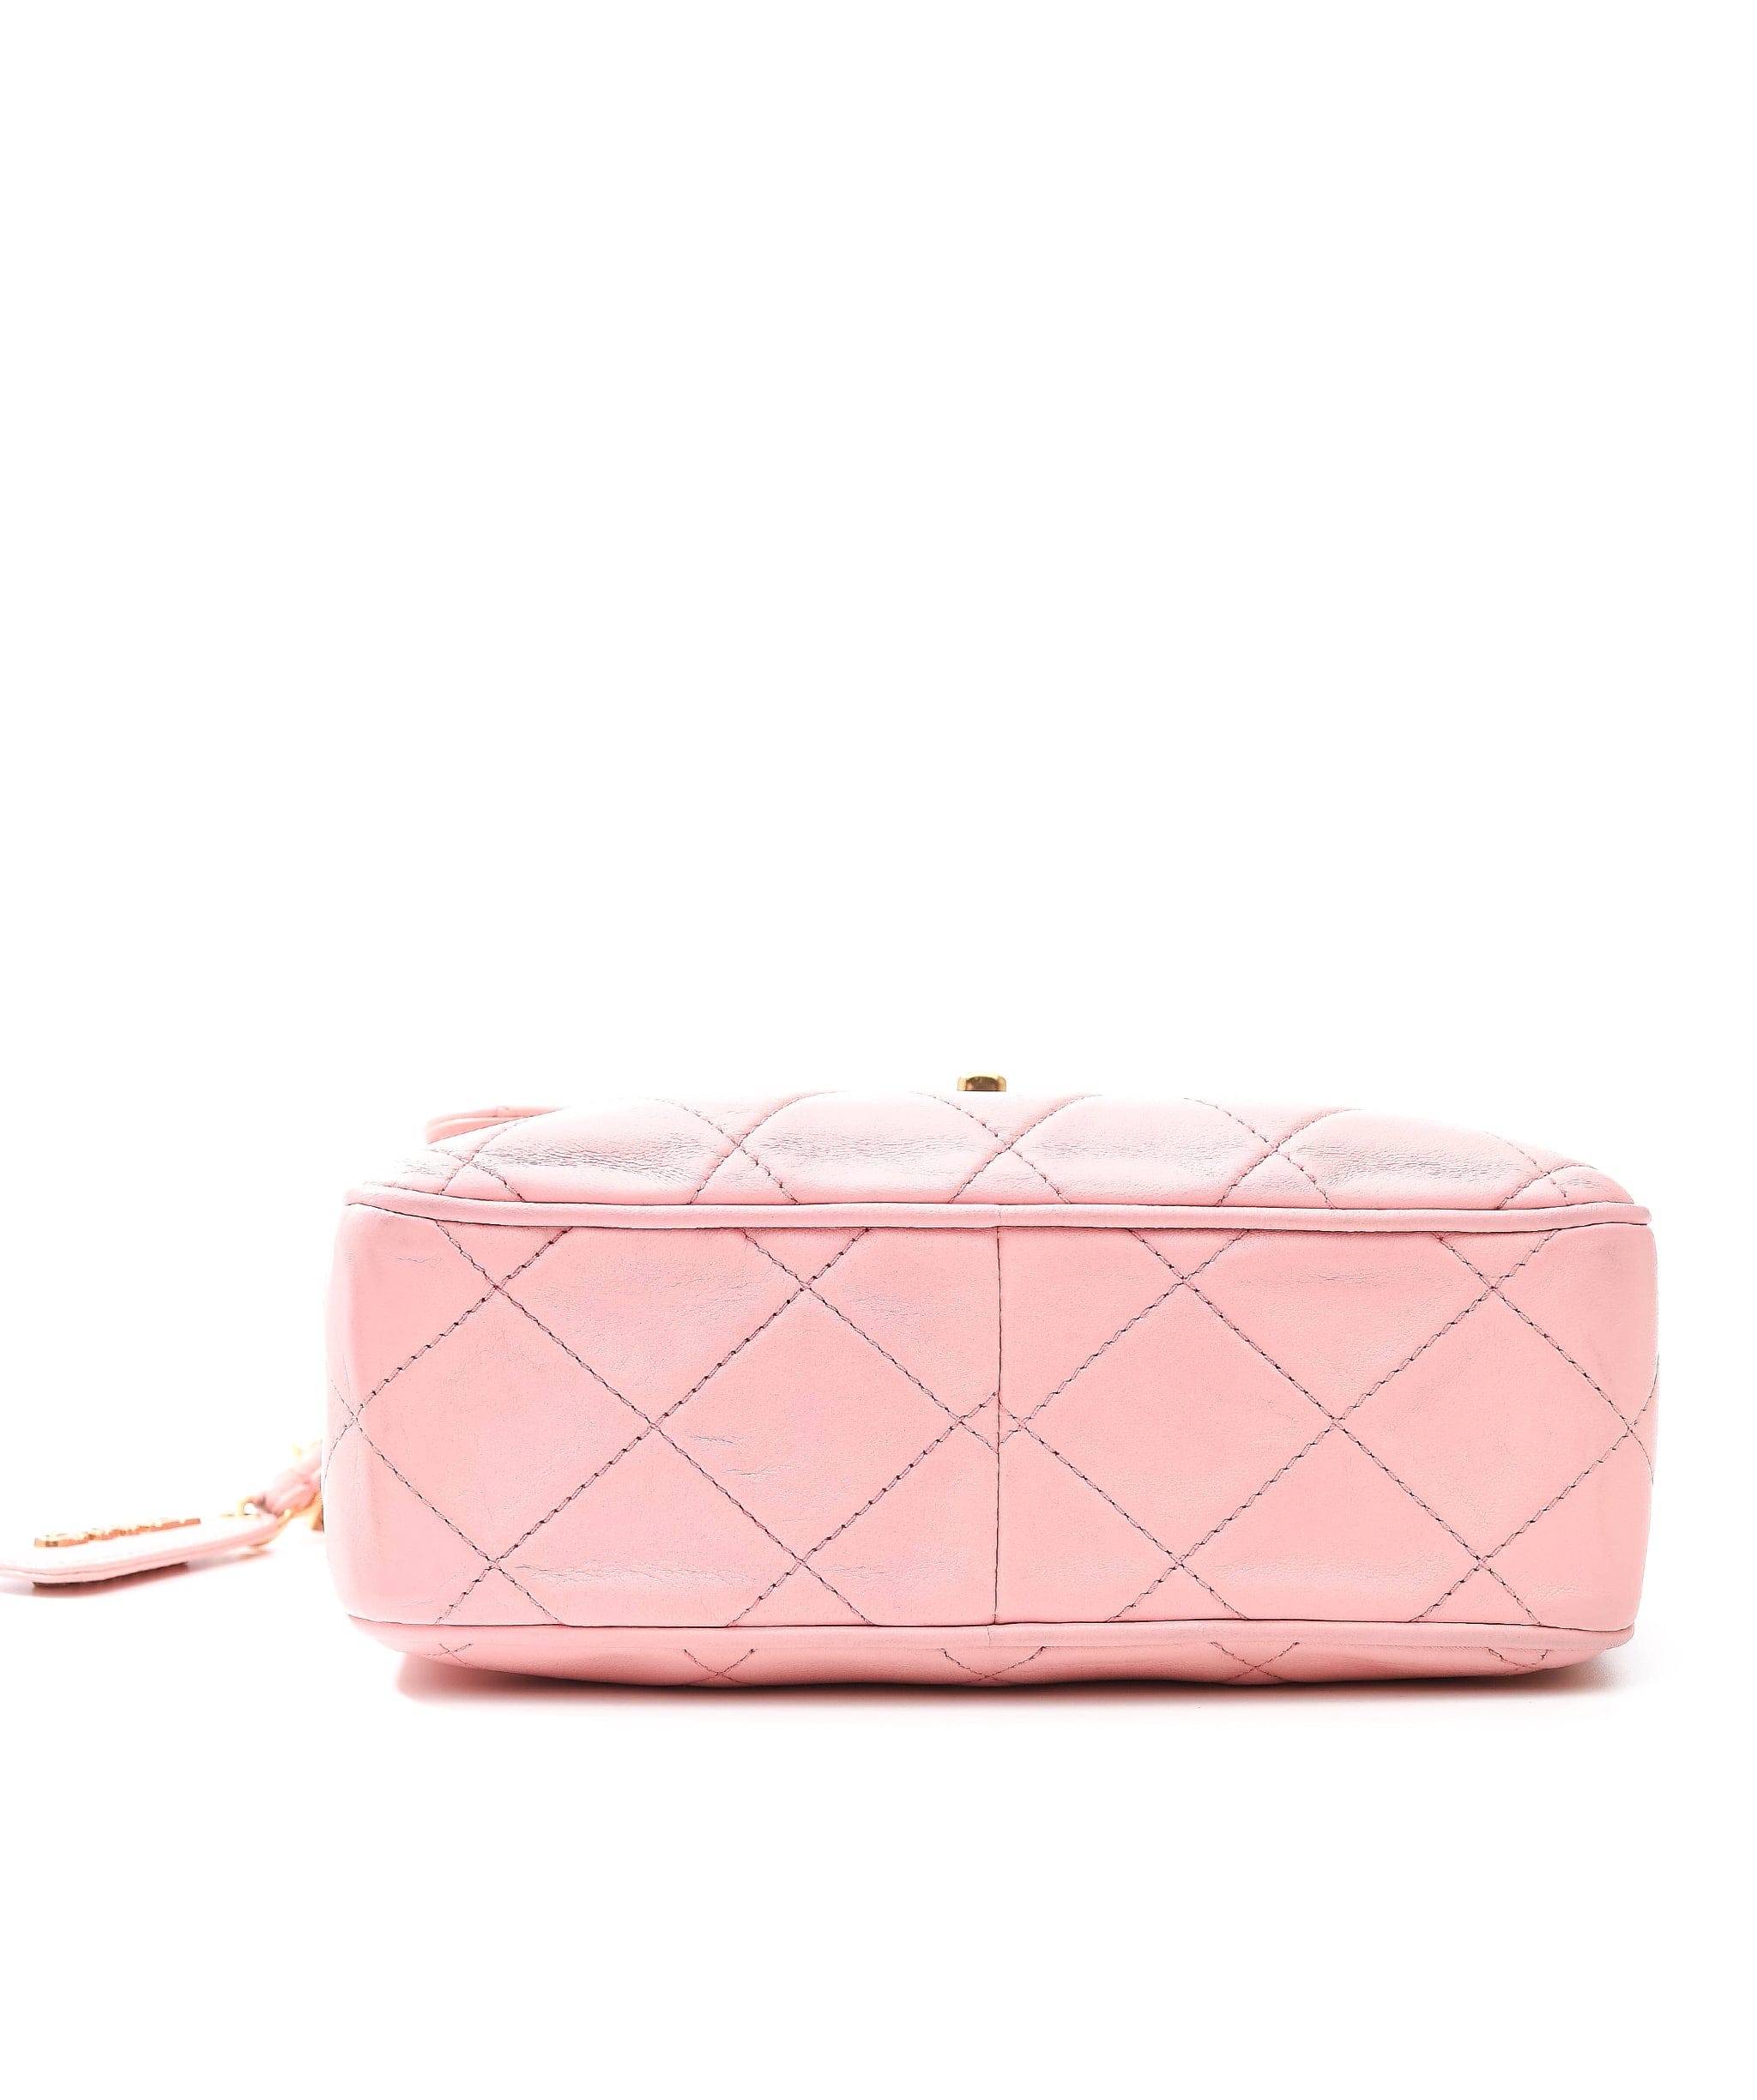 Chanel Chanel Small Pink Lambskin Camera bag - AWL2773